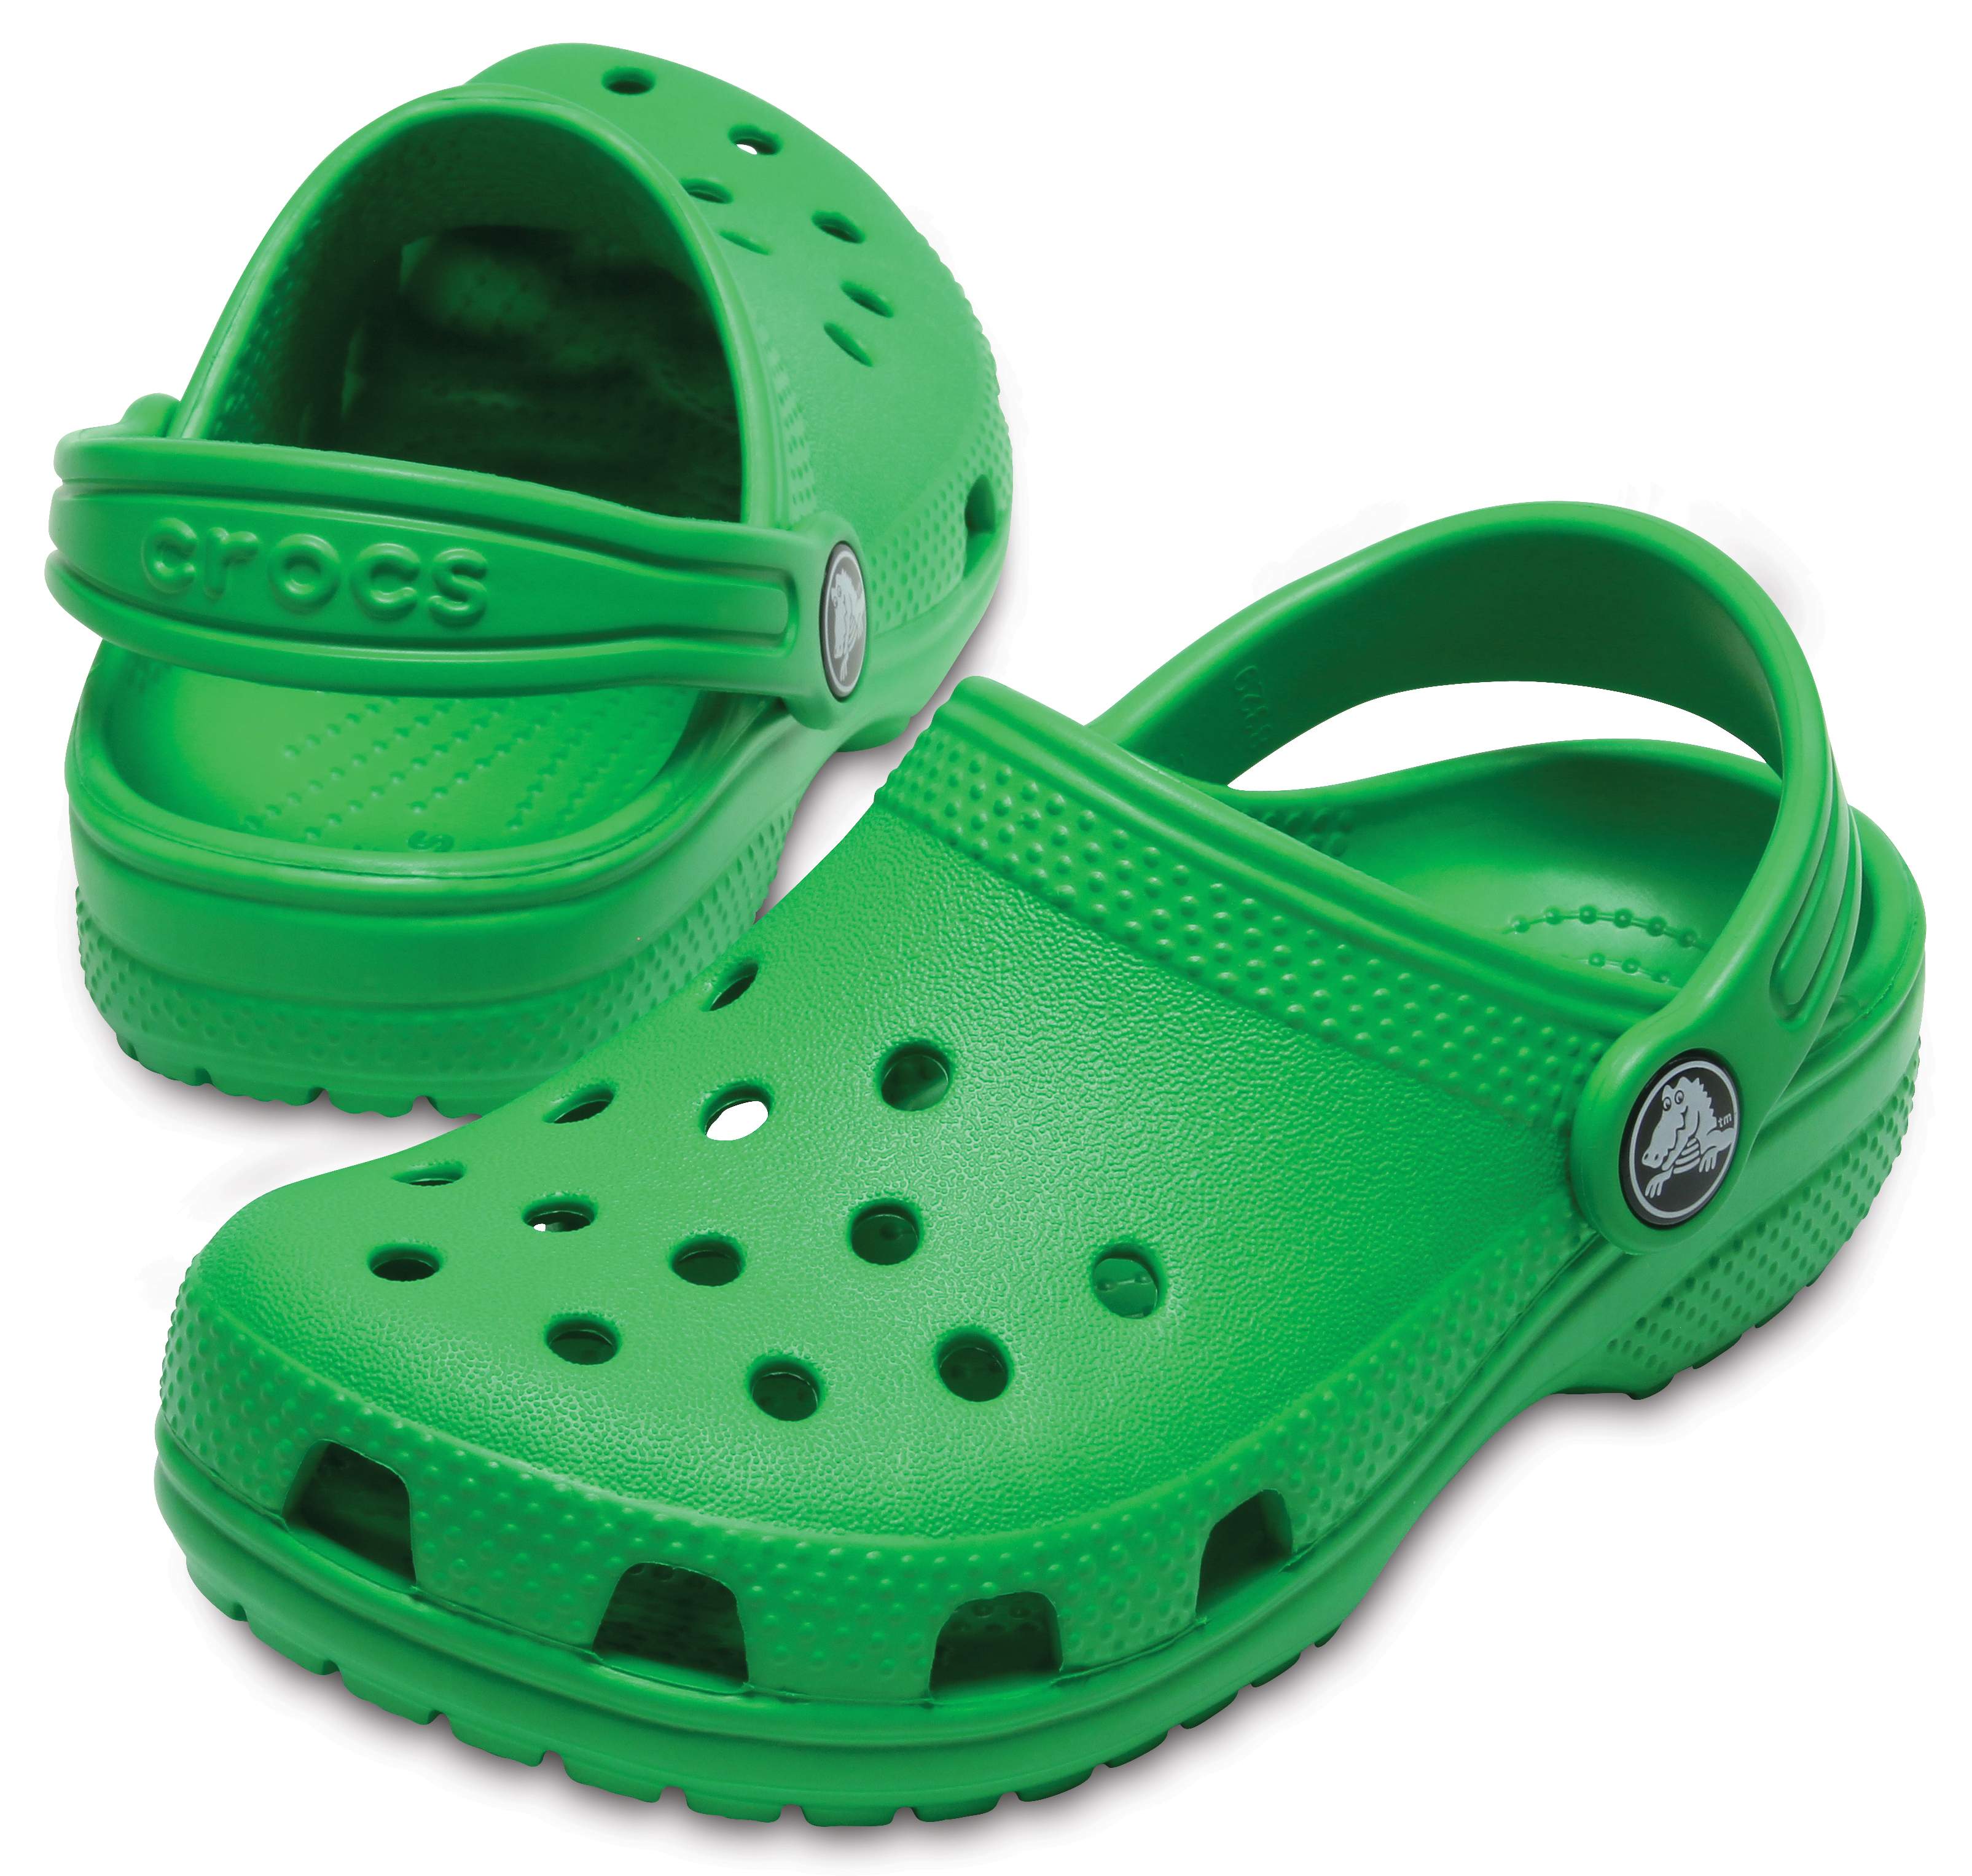  Crocs  Kids  Classic Clog Children  Girls Boys Choose size 